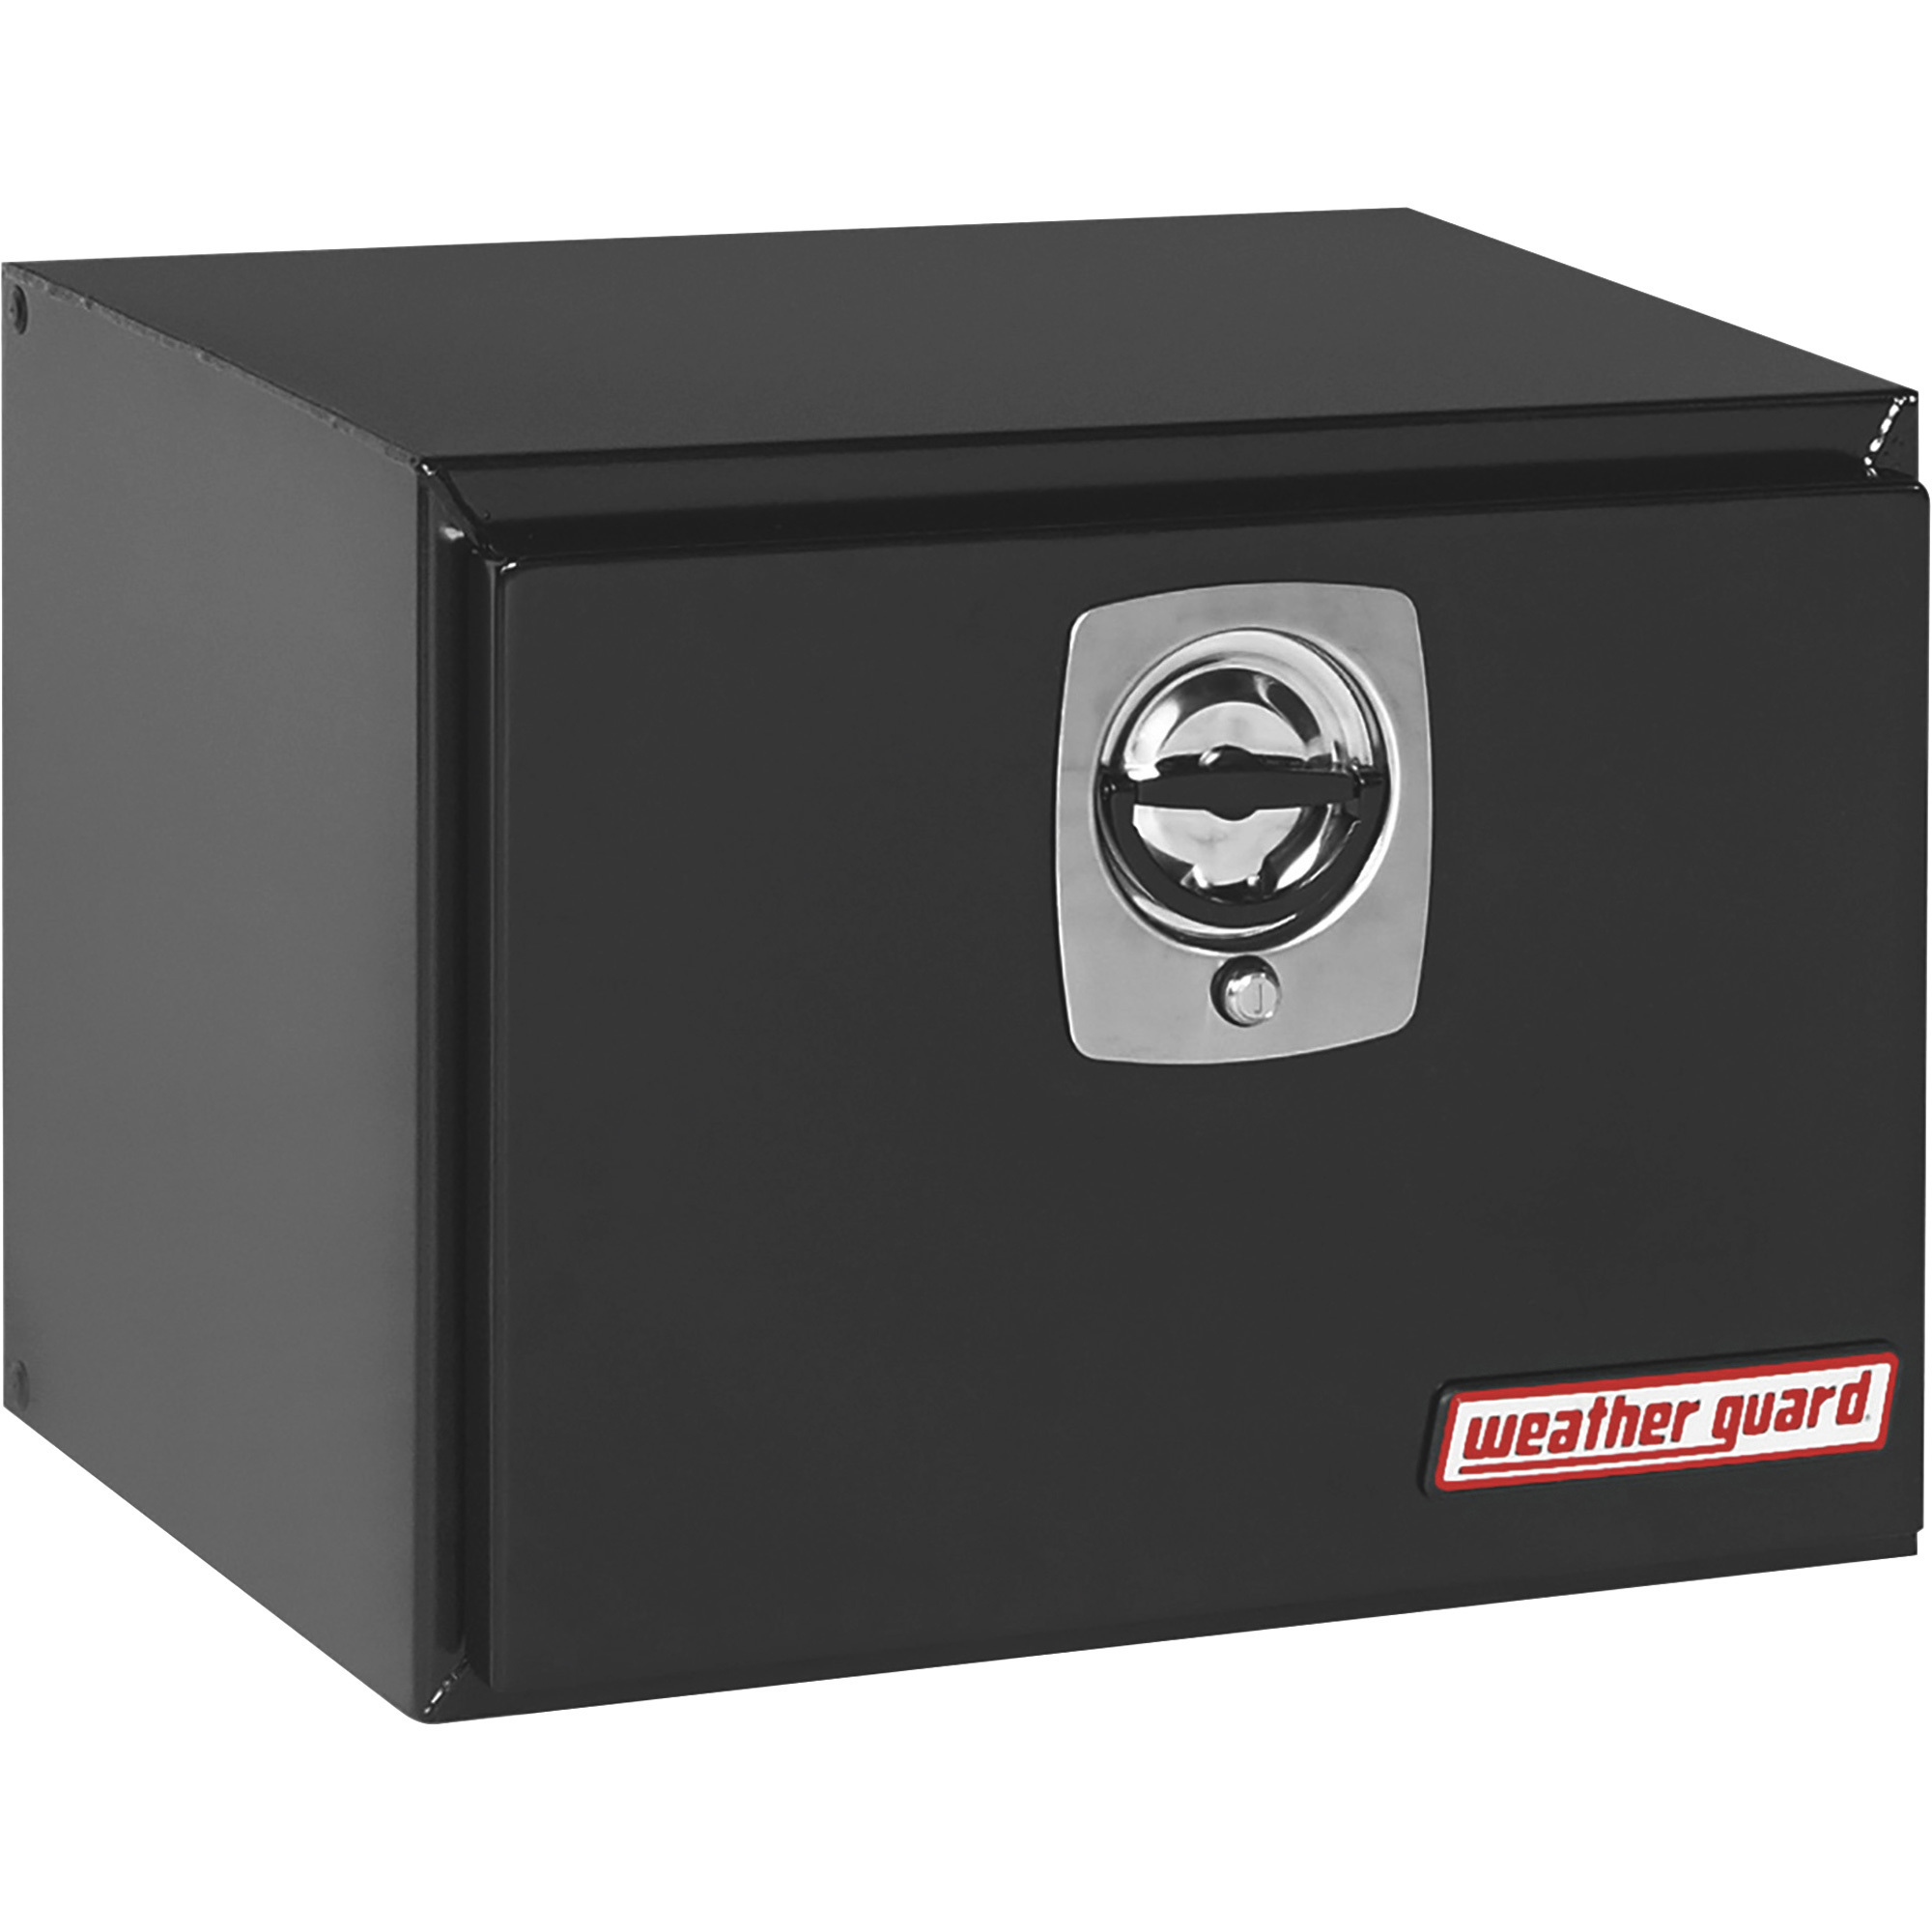 Weather Guard Underbody Truck Tool Box, Steel, Gloss Black, 24.13Inch L x 18.25Inch W x 18.13Inch H, Model 524-5-02